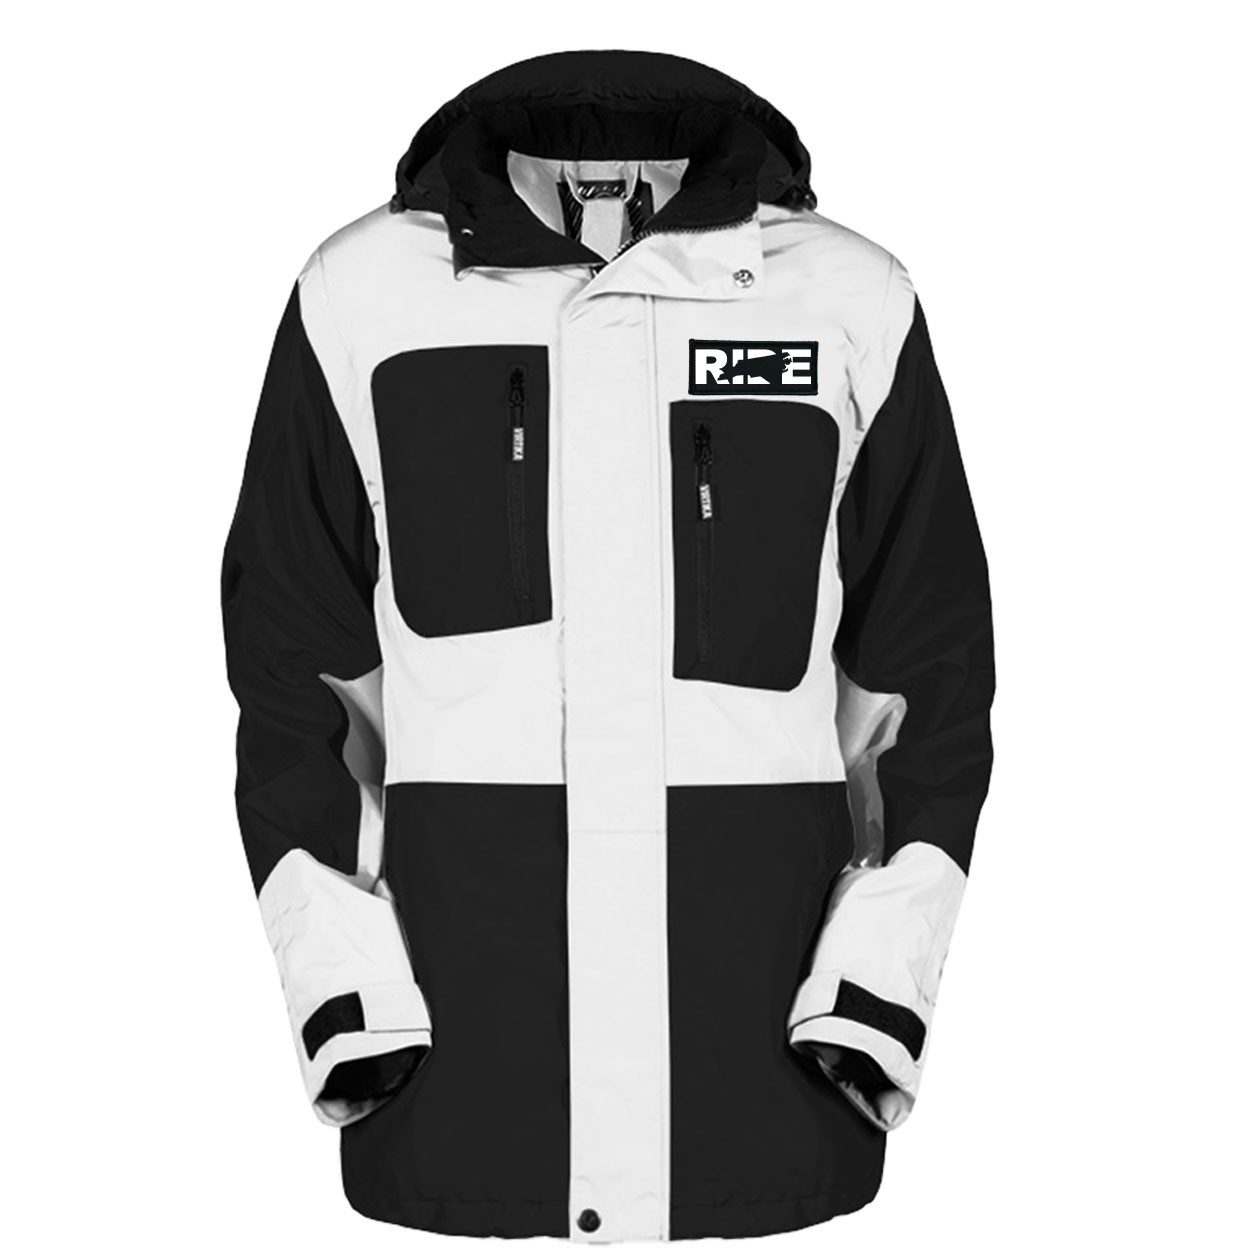 Ride North Carolina Pro Waterproof Breathable Winter Virtika Jacket Black/White (White Logo)